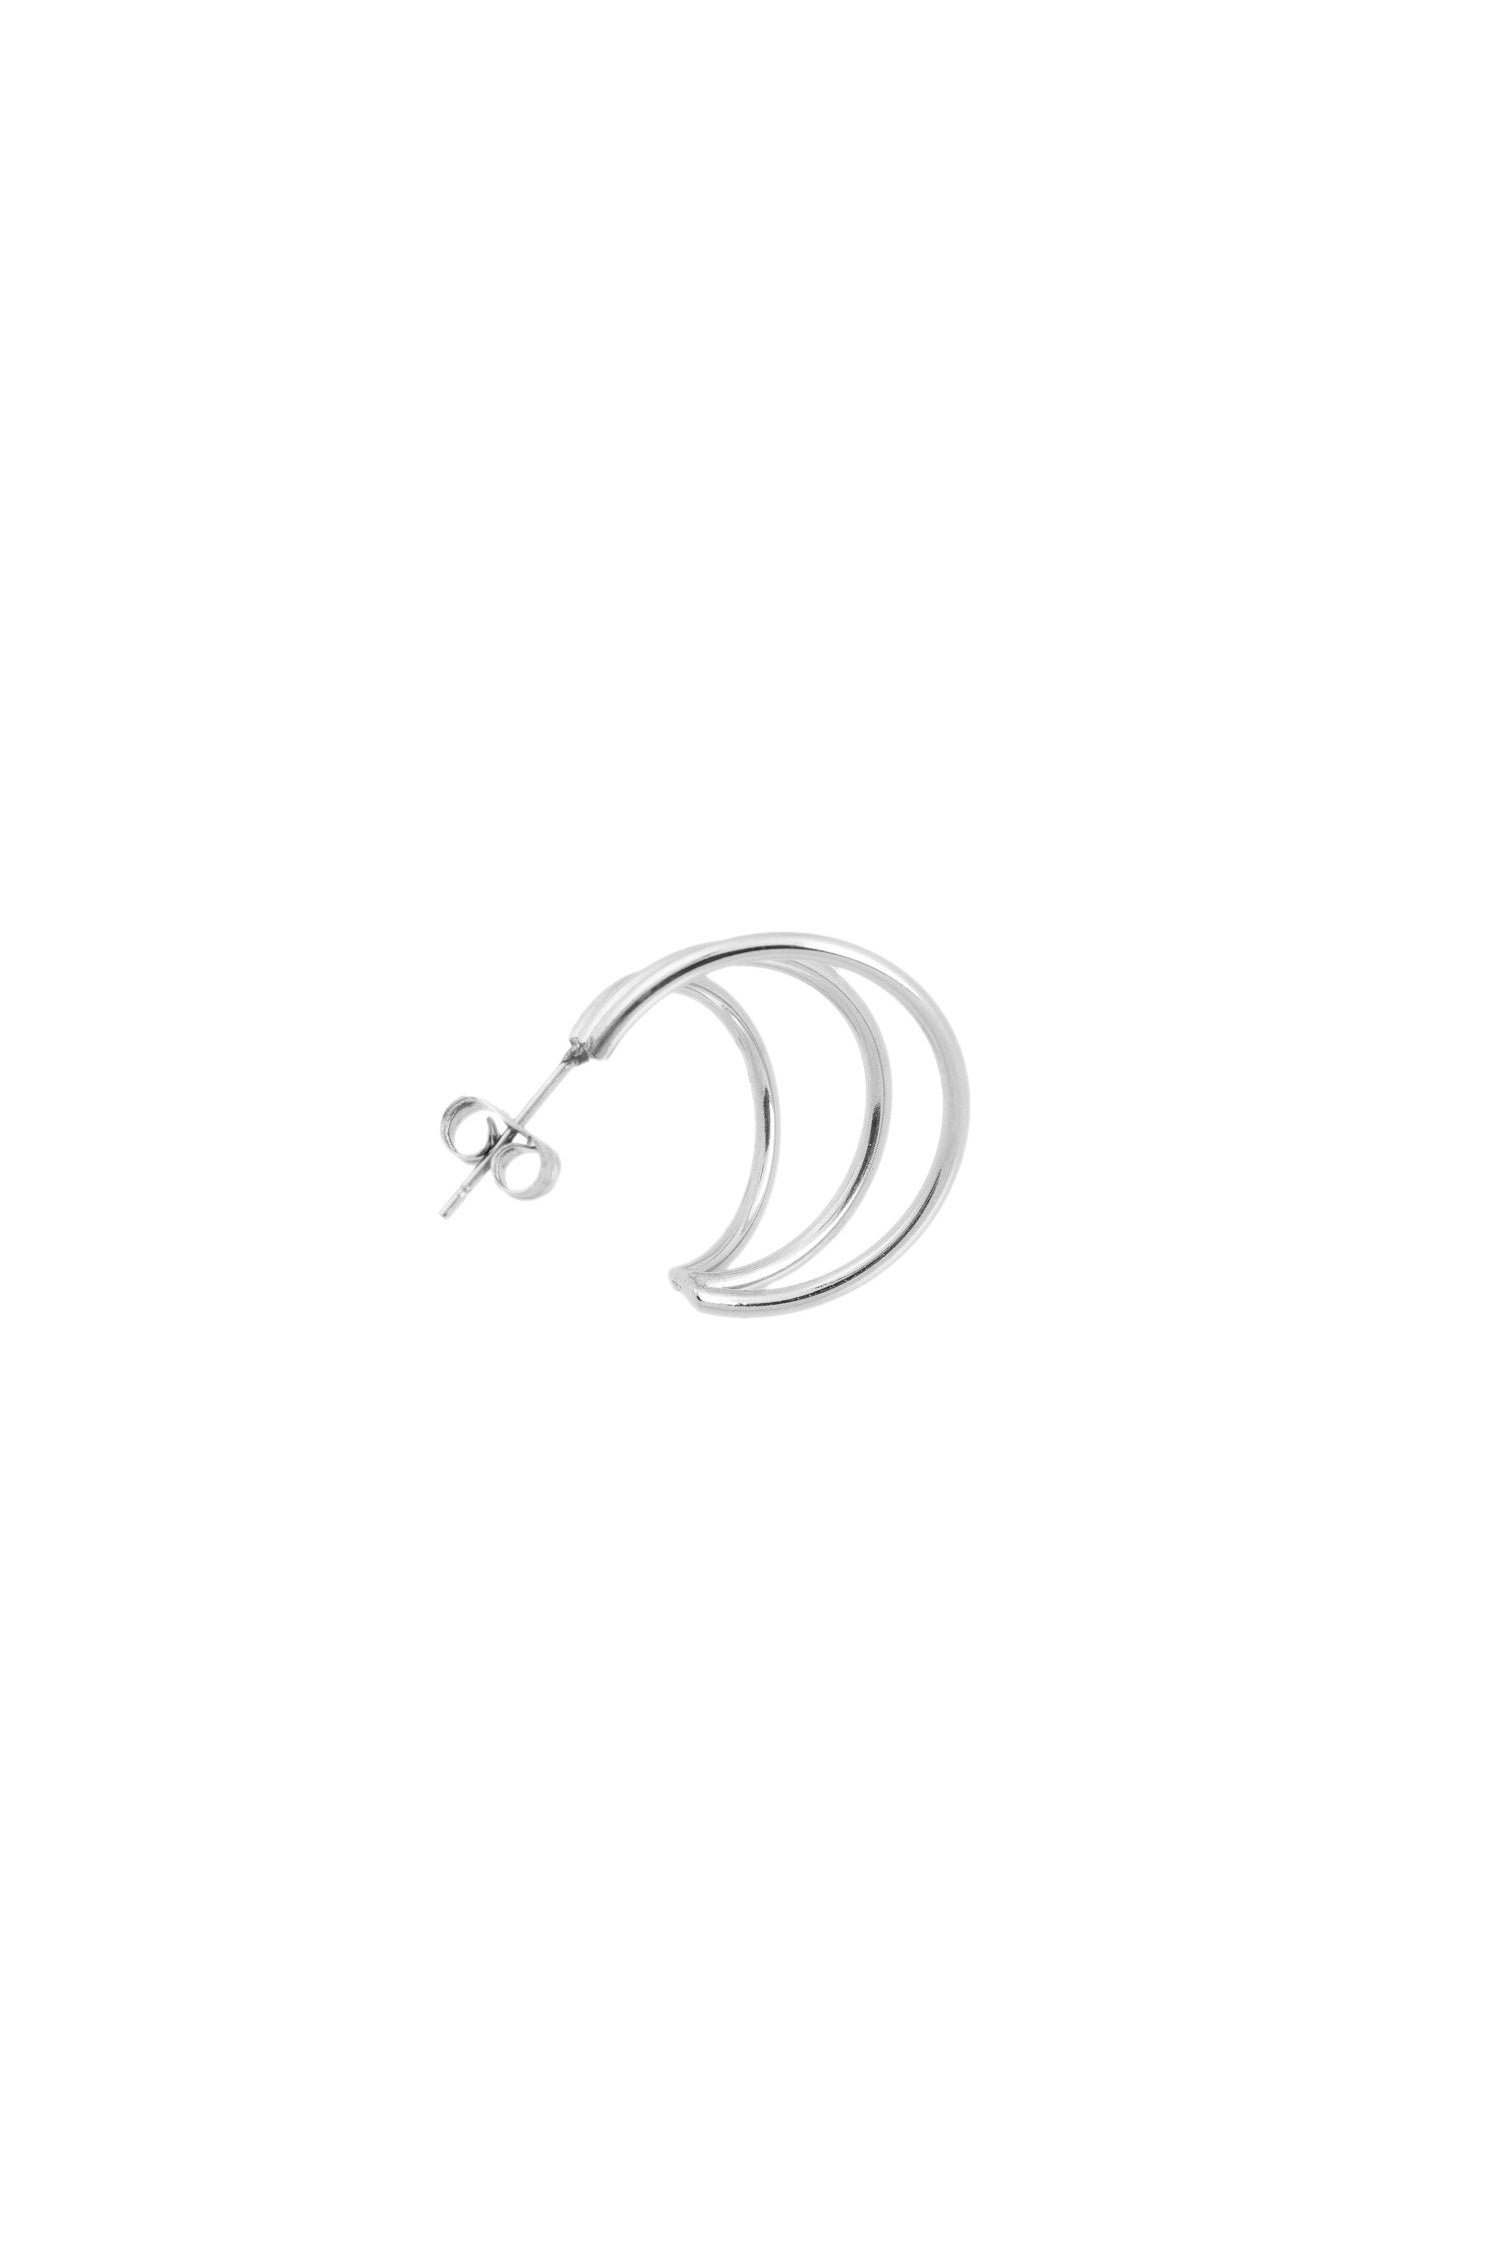 Bandhu Wire Earrings - Silver - RUM Amsterdam